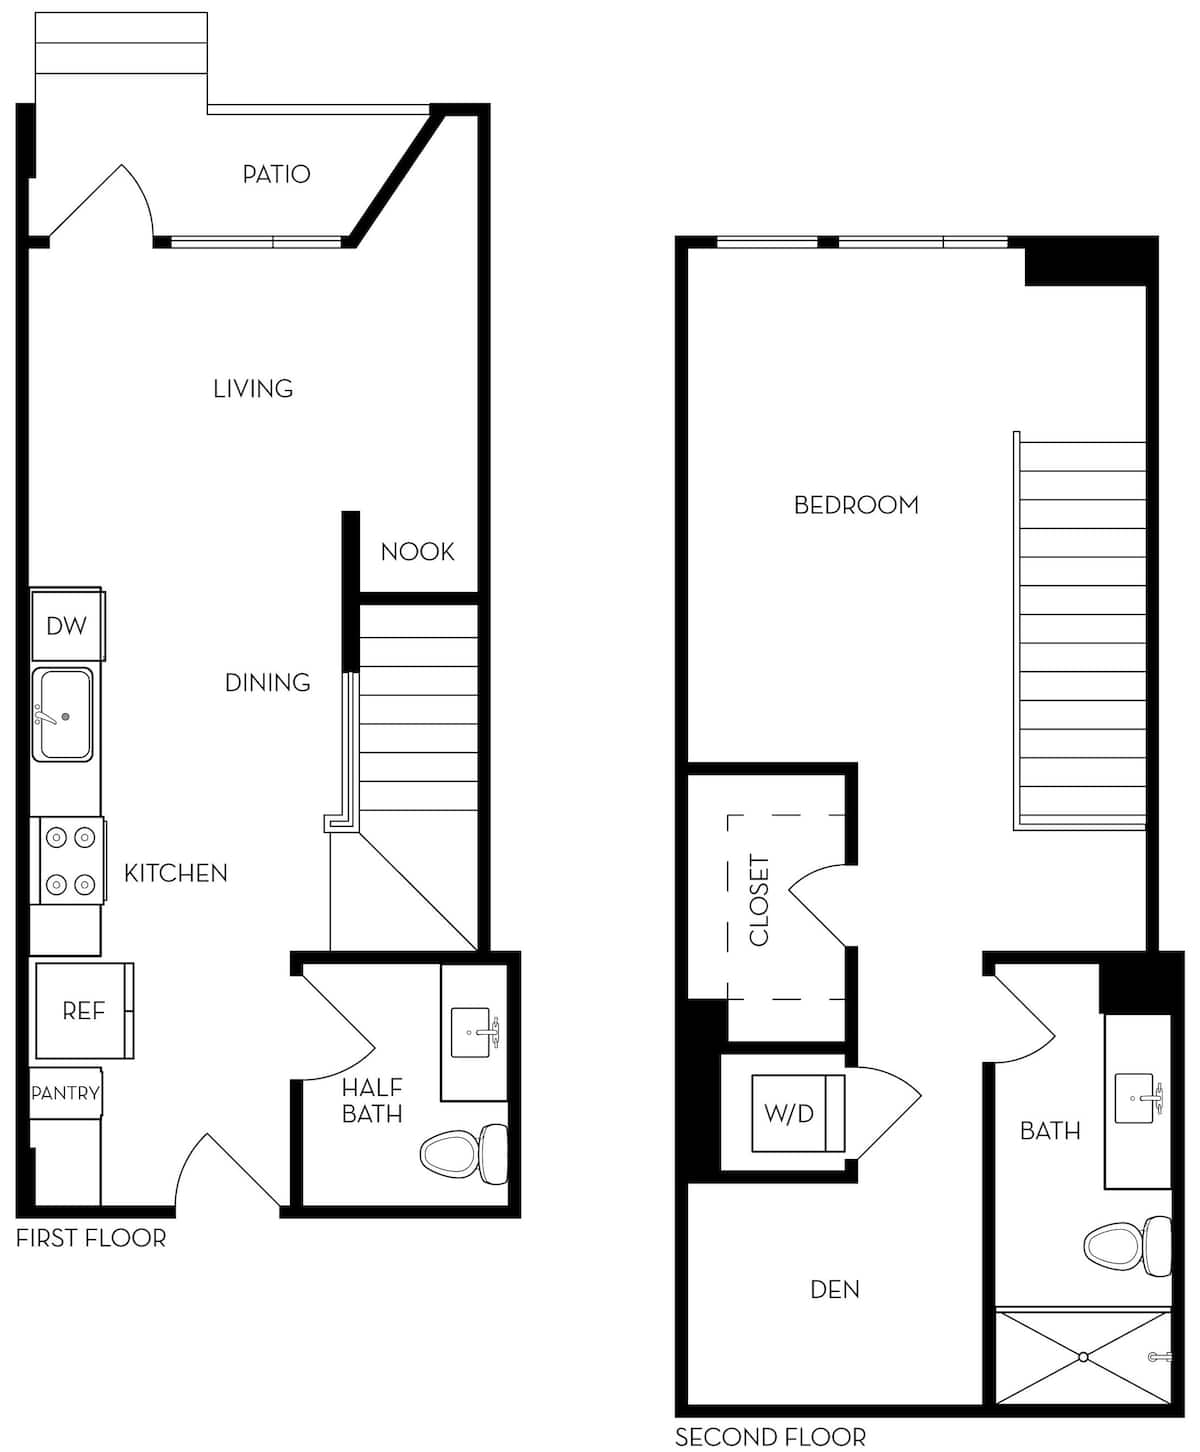 Floorplan diagram for TA2d - 1BR 1.5BA  Townhome + Den, showing 1 bedroom